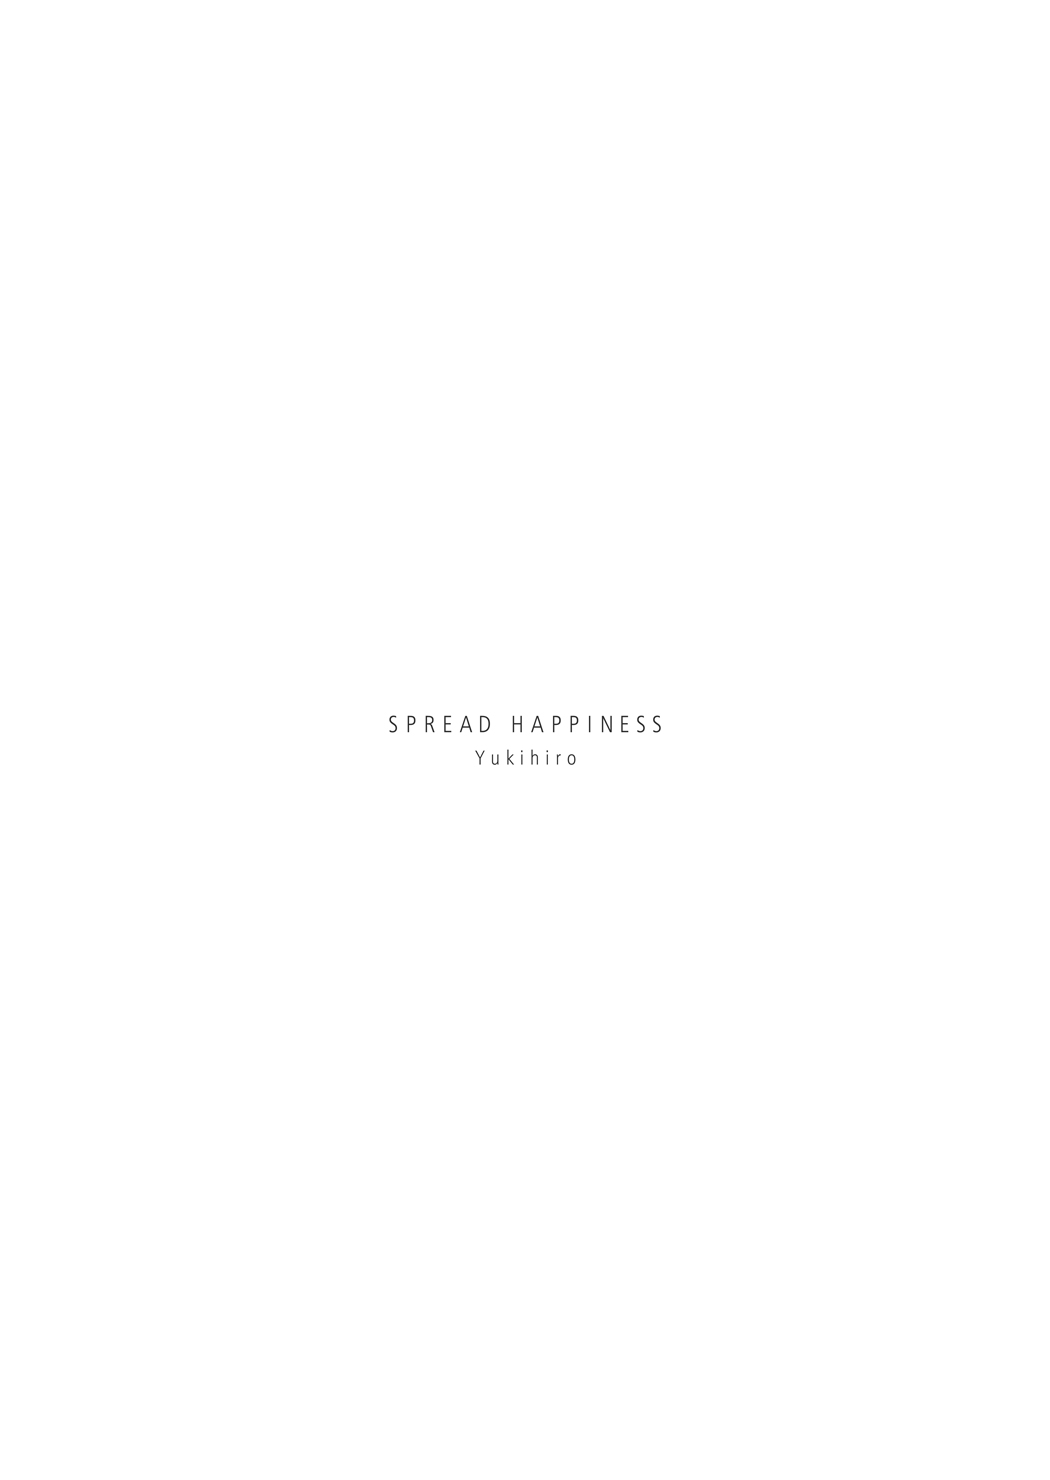 [Spread Happiness] RING 第3話｢Princess~ロゼット~｣